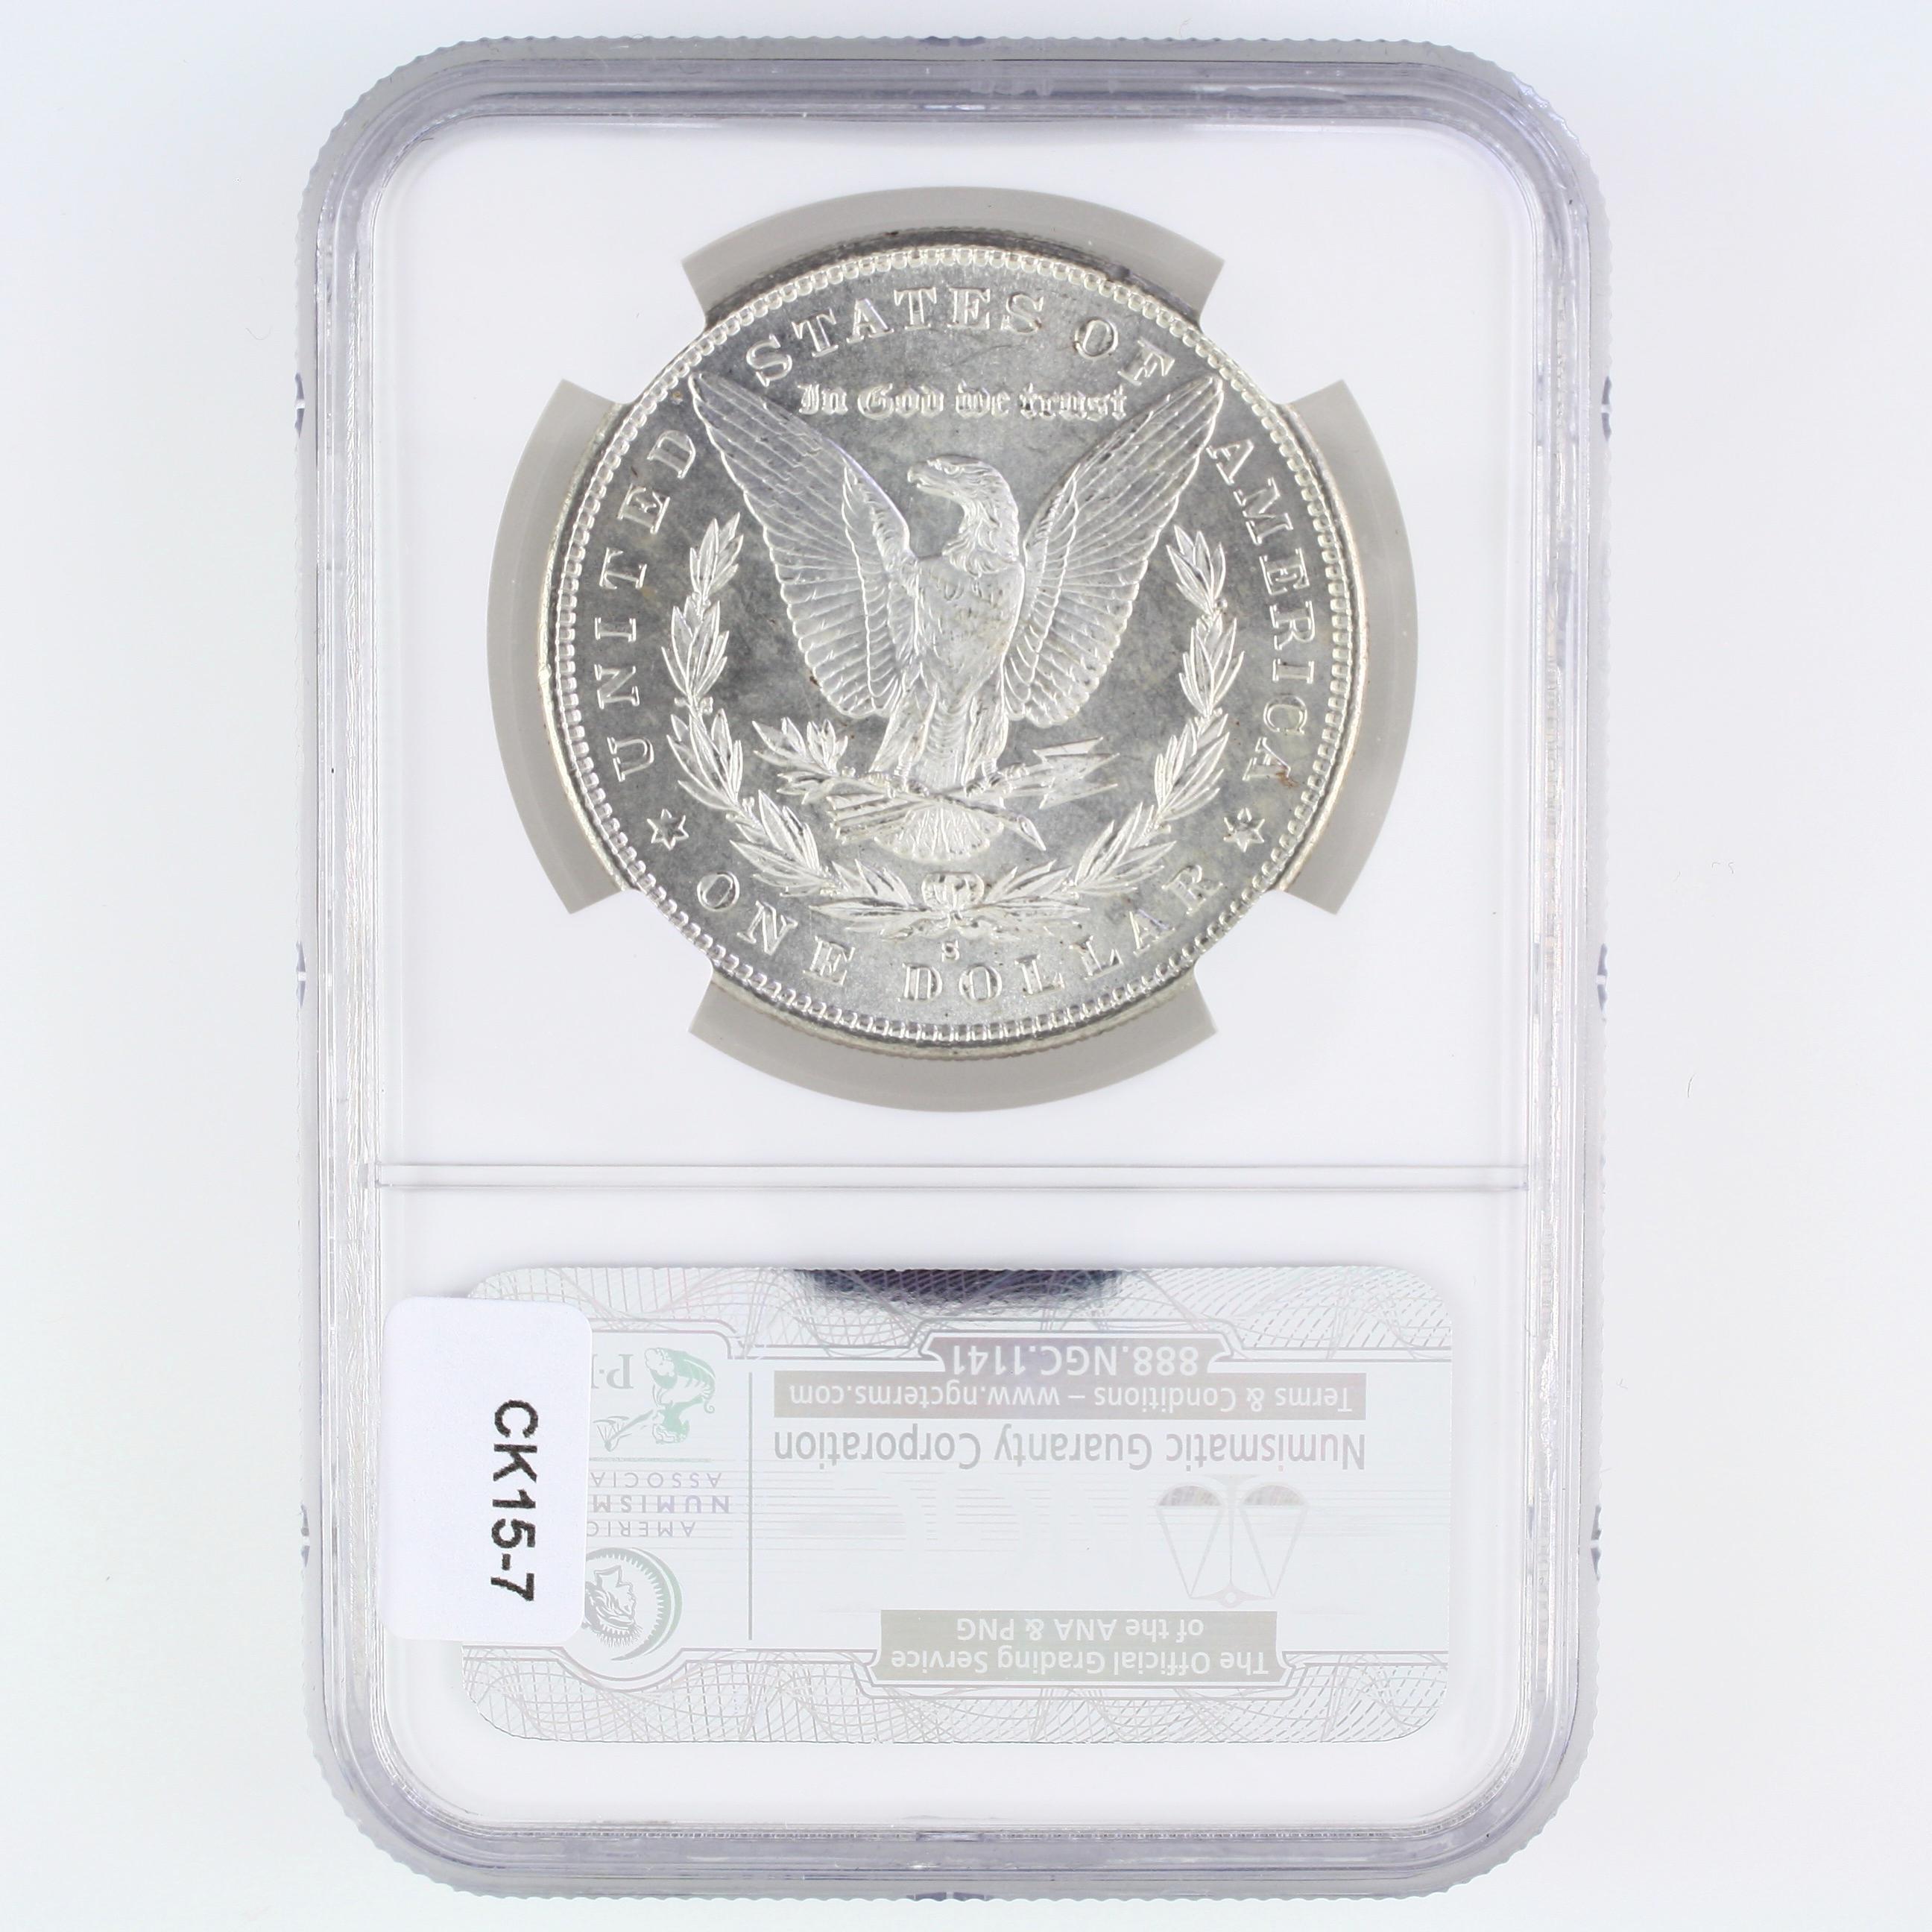 Certified 1879-S U.S. Morgan silver dollar